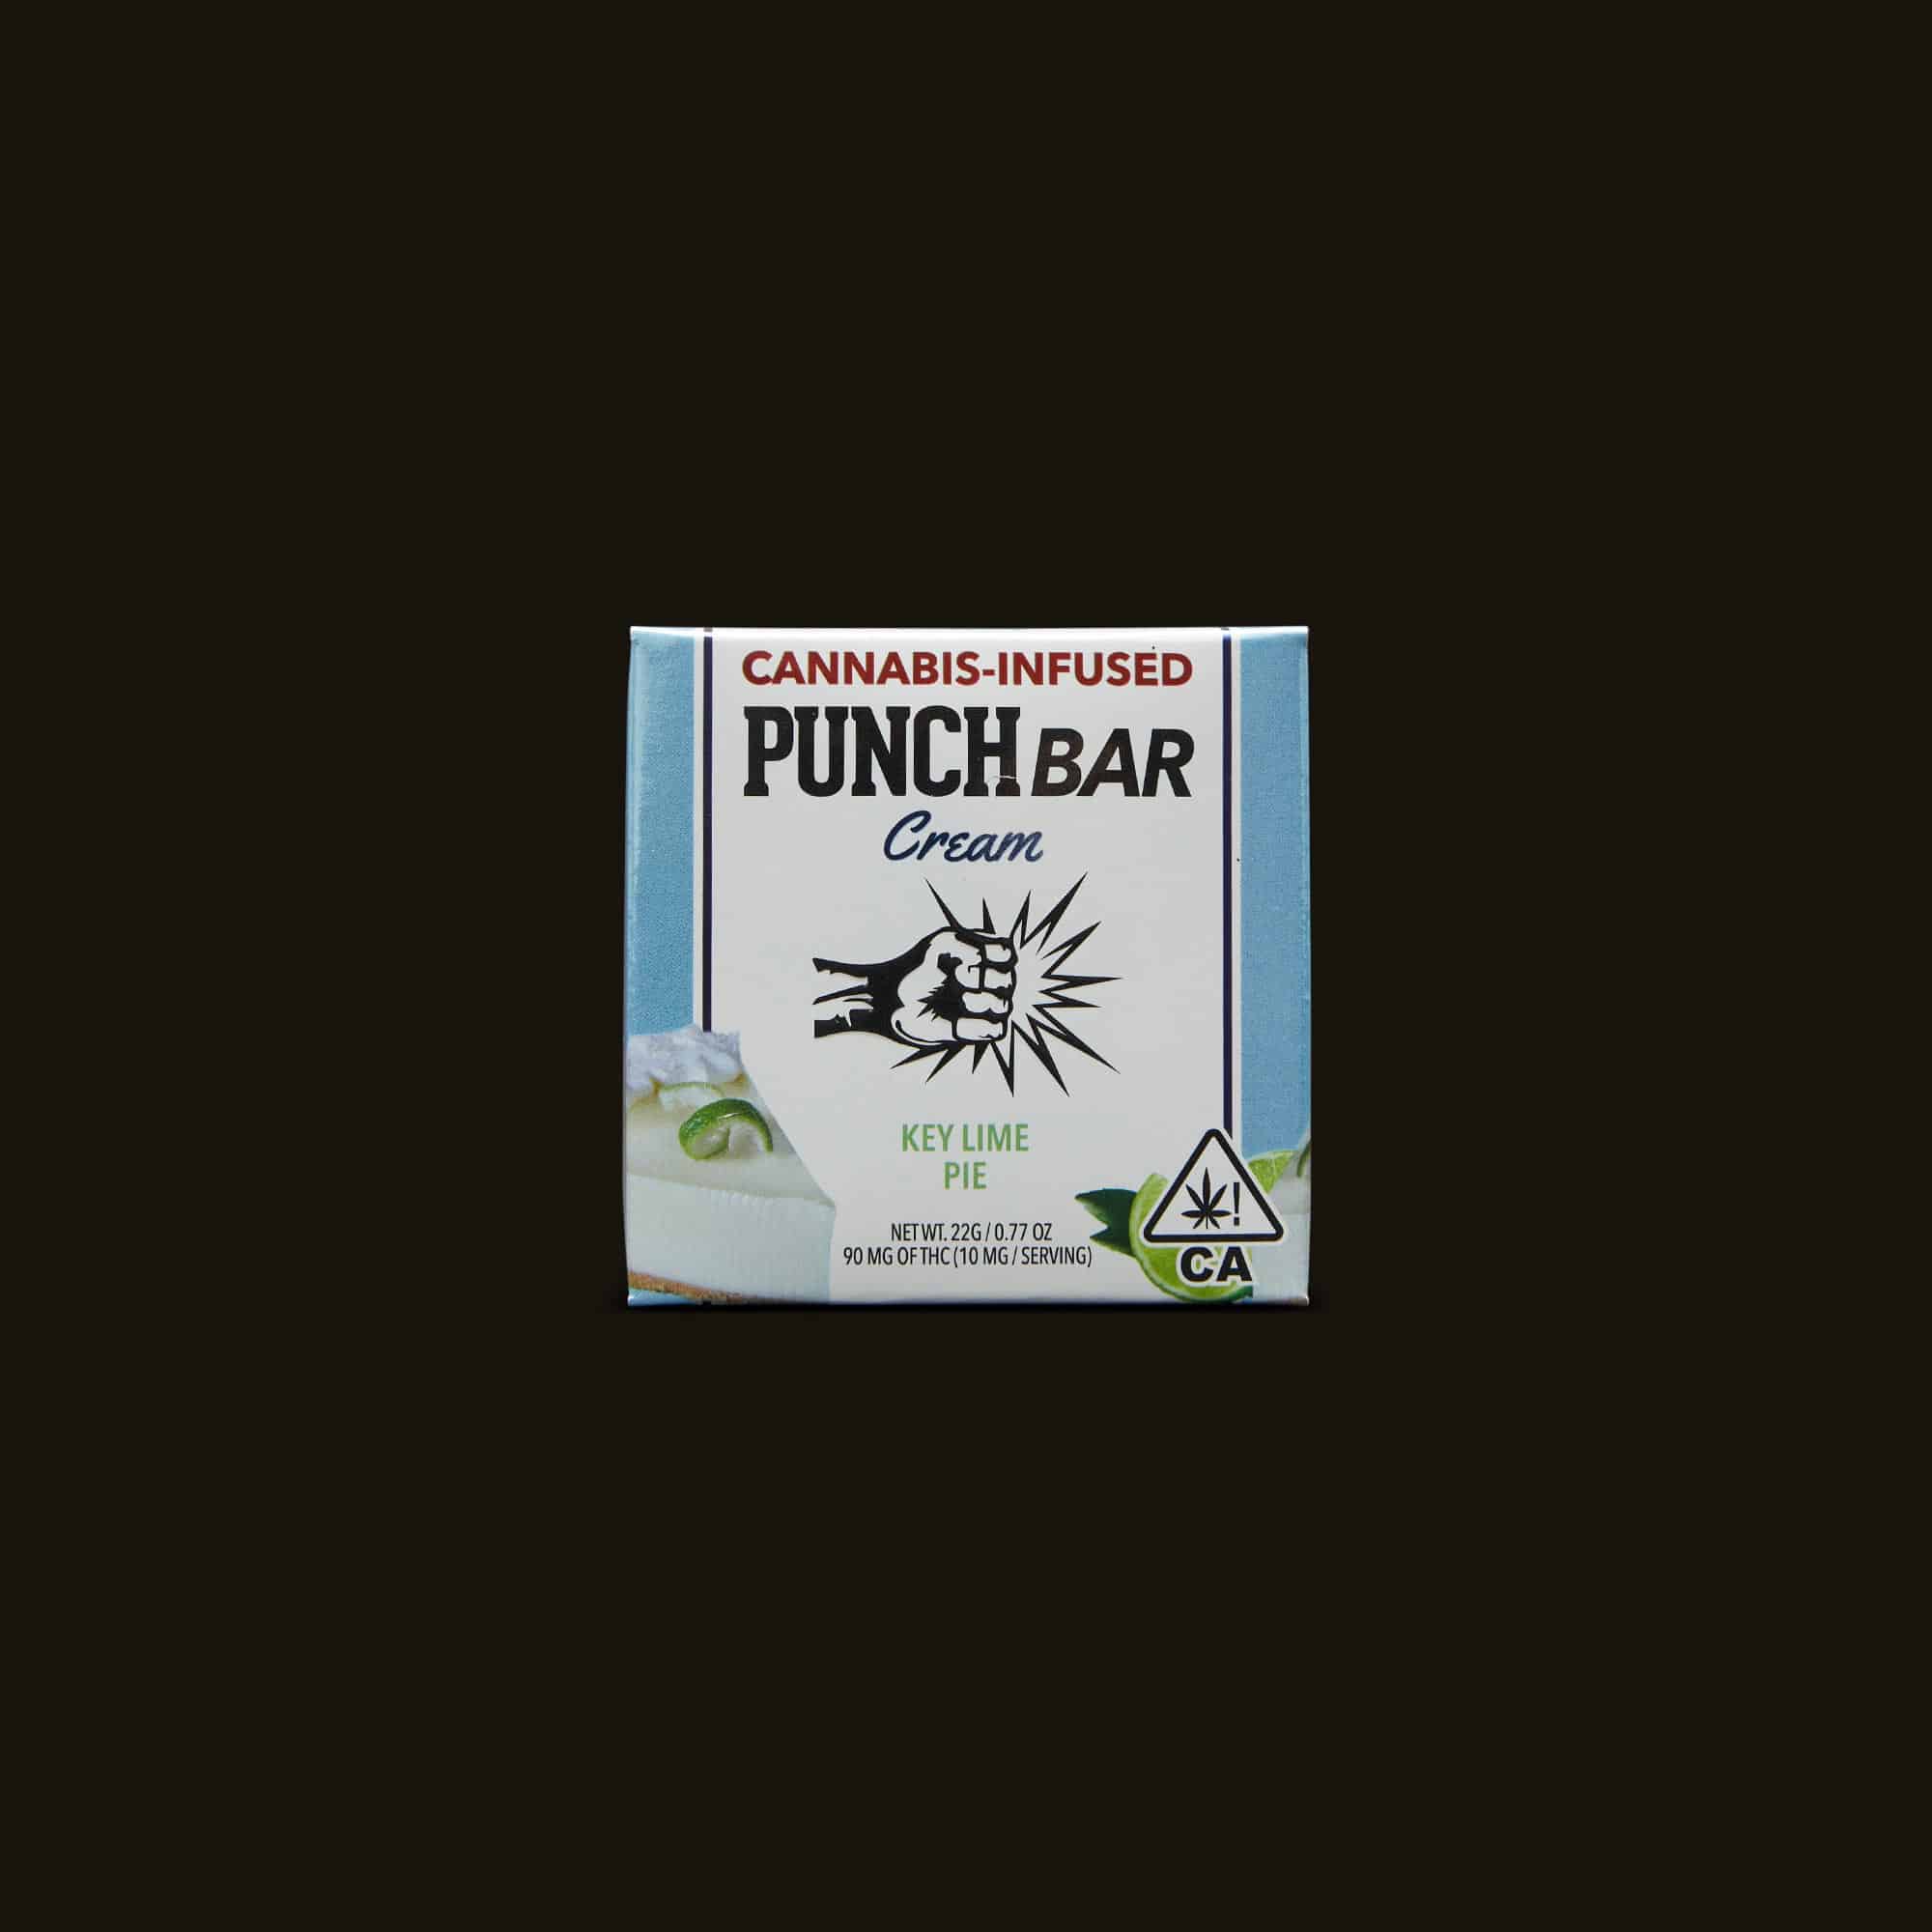 Punch-Punch-Bar-Cream-Key-Lime-Pie1584-1611321.jpg